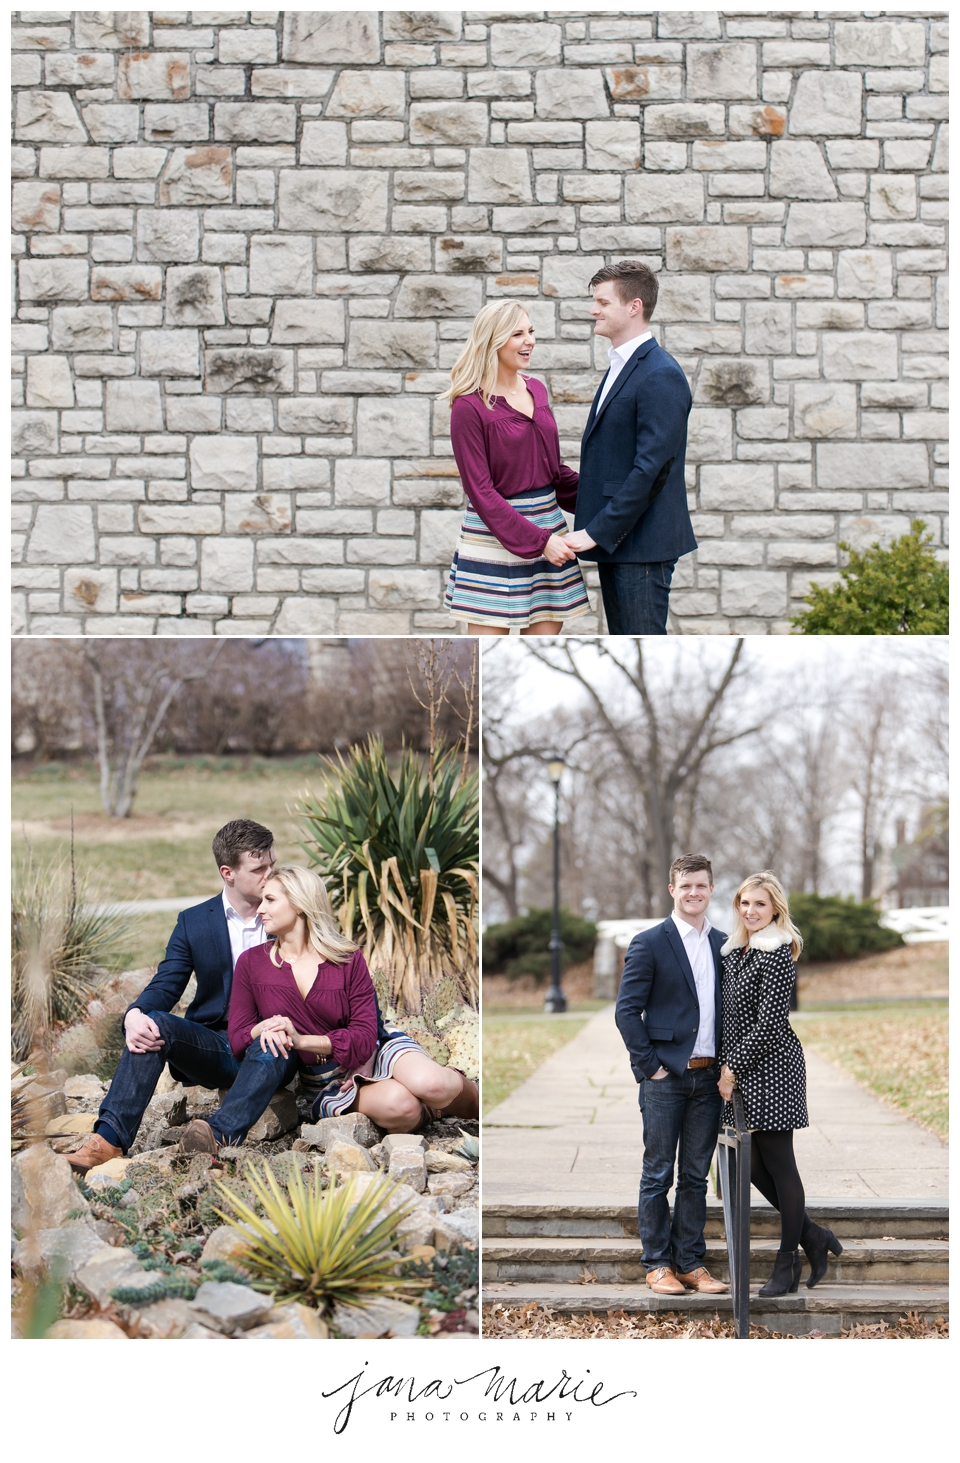 Loose Park Rose Garden, Kansas City engagement, Beloved session, Portraits, Jana Marie Photography, Couples, Love, Happy, KC wedding, Winter portraits